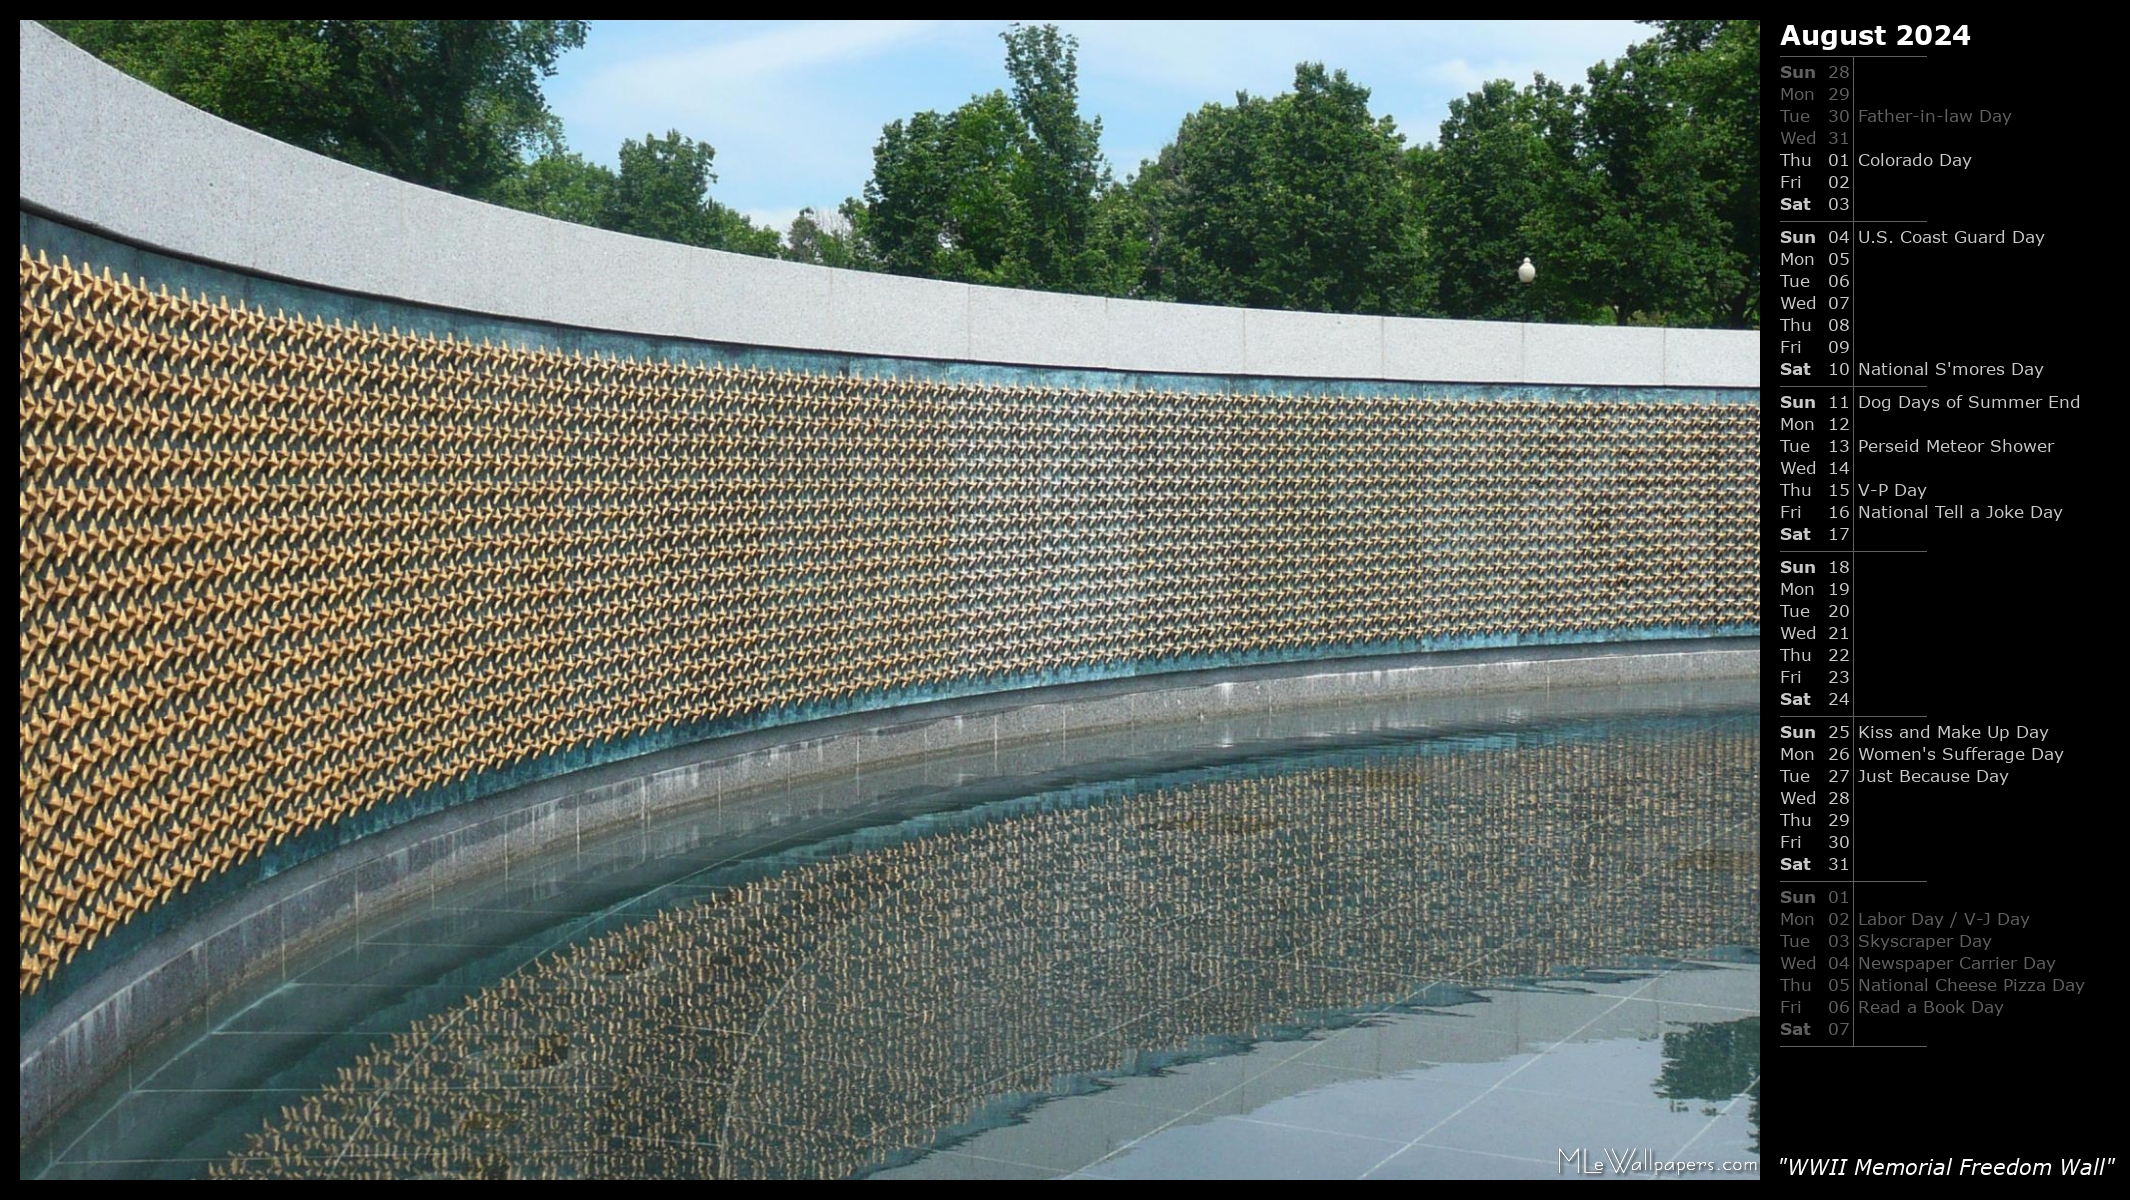 MLeWallpapers.com - WWII Memorial Freedom Wall (Calendar)